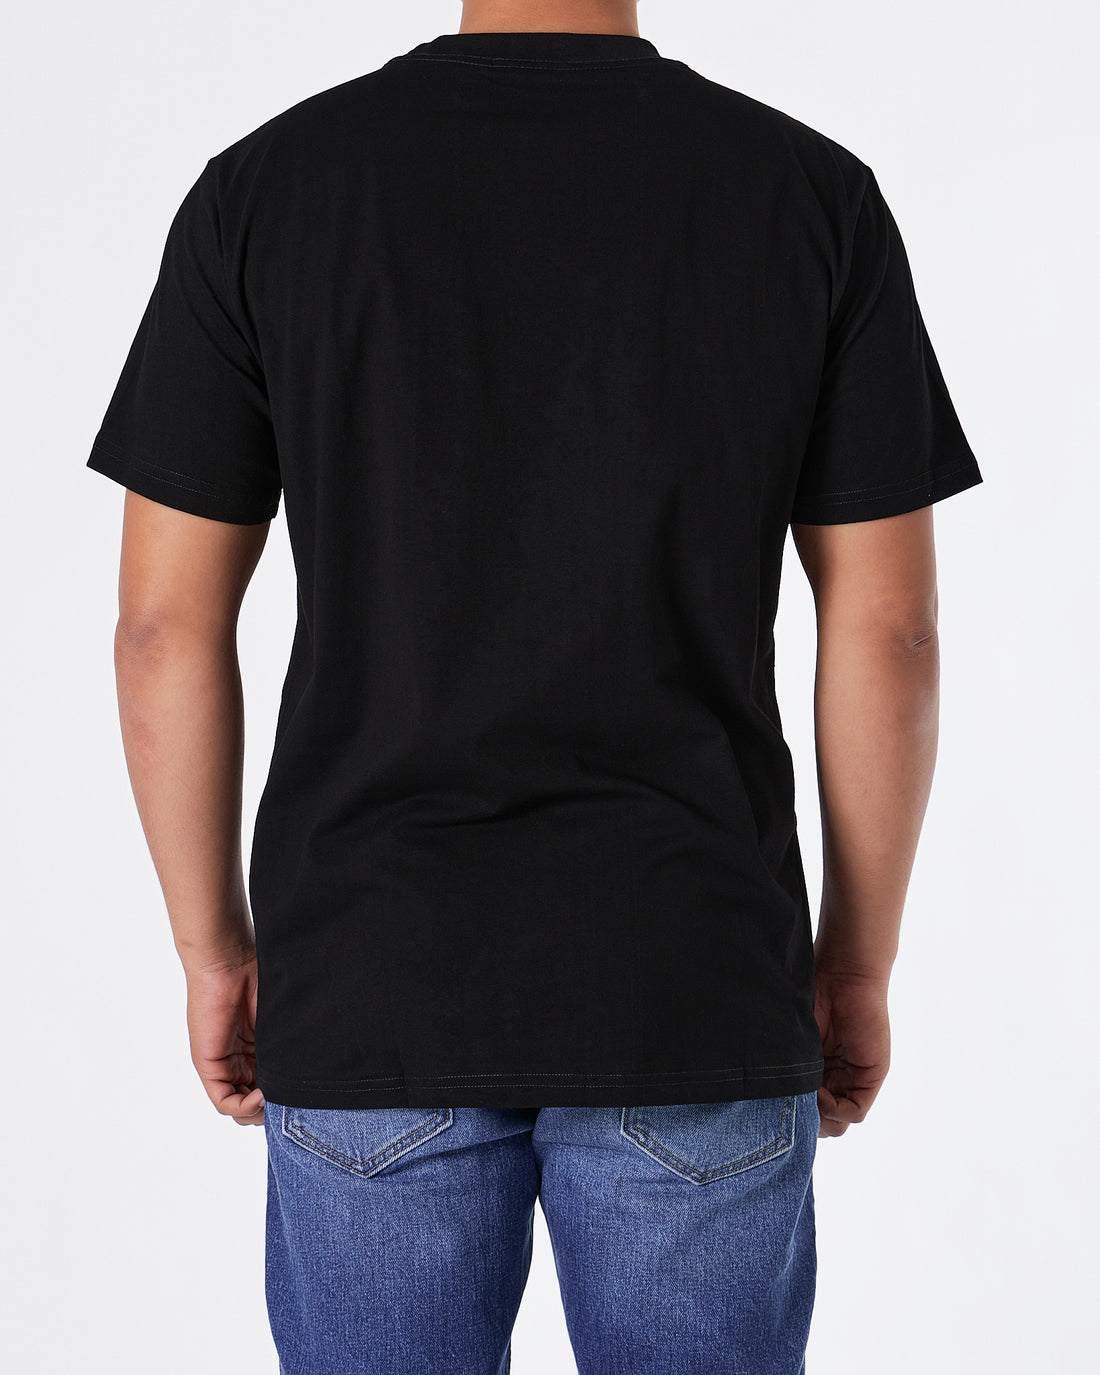 VER Medusa Embroidered Men Black T-Shirt 23.90